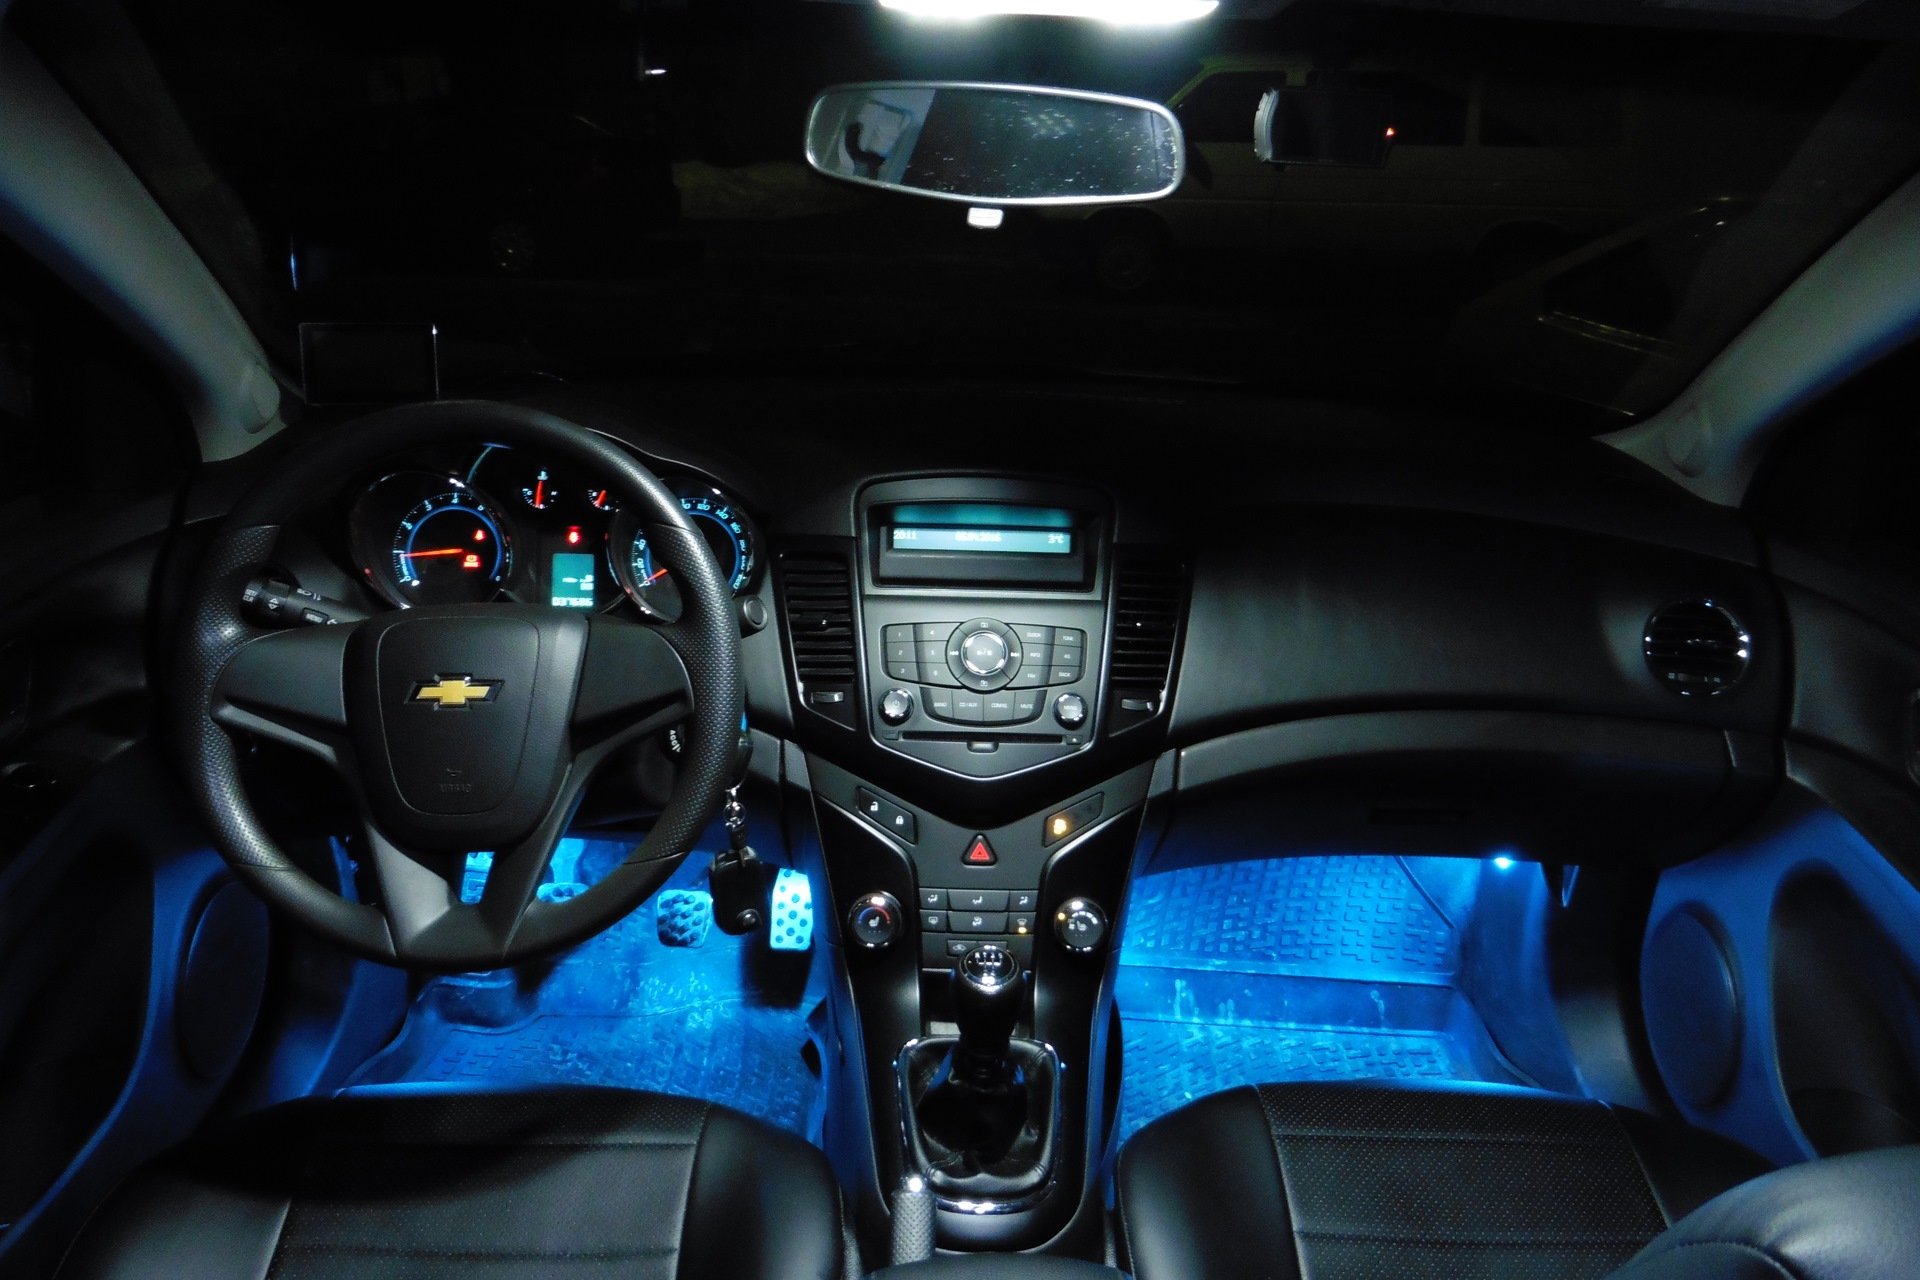 Шевроле внутри салона. Chevrolet Cruze 2012 салон. Chevrolet Cruze Interior Tuning. Chevrolet Cruze внутри. Chevrolet Cruze Hatchback салон.